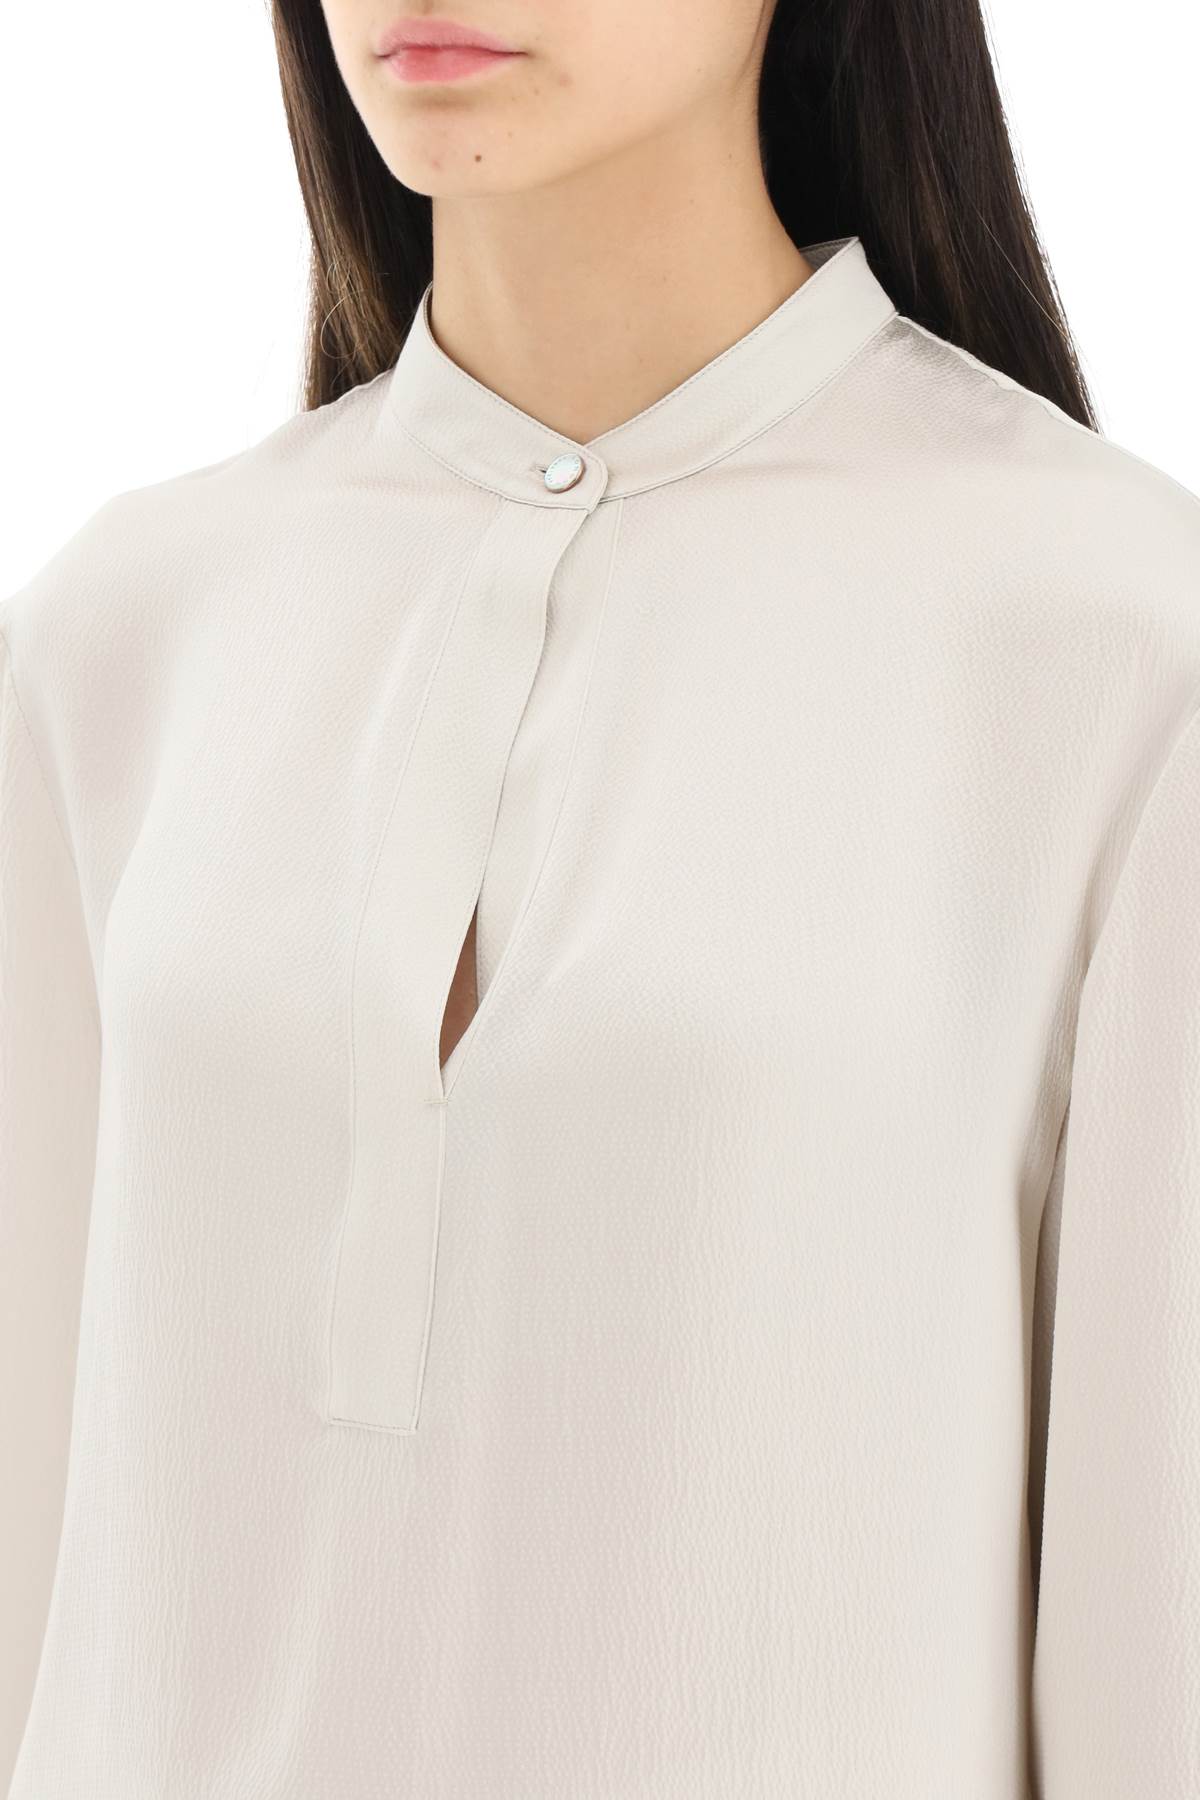 Agnona hammered silk satin blouse-3